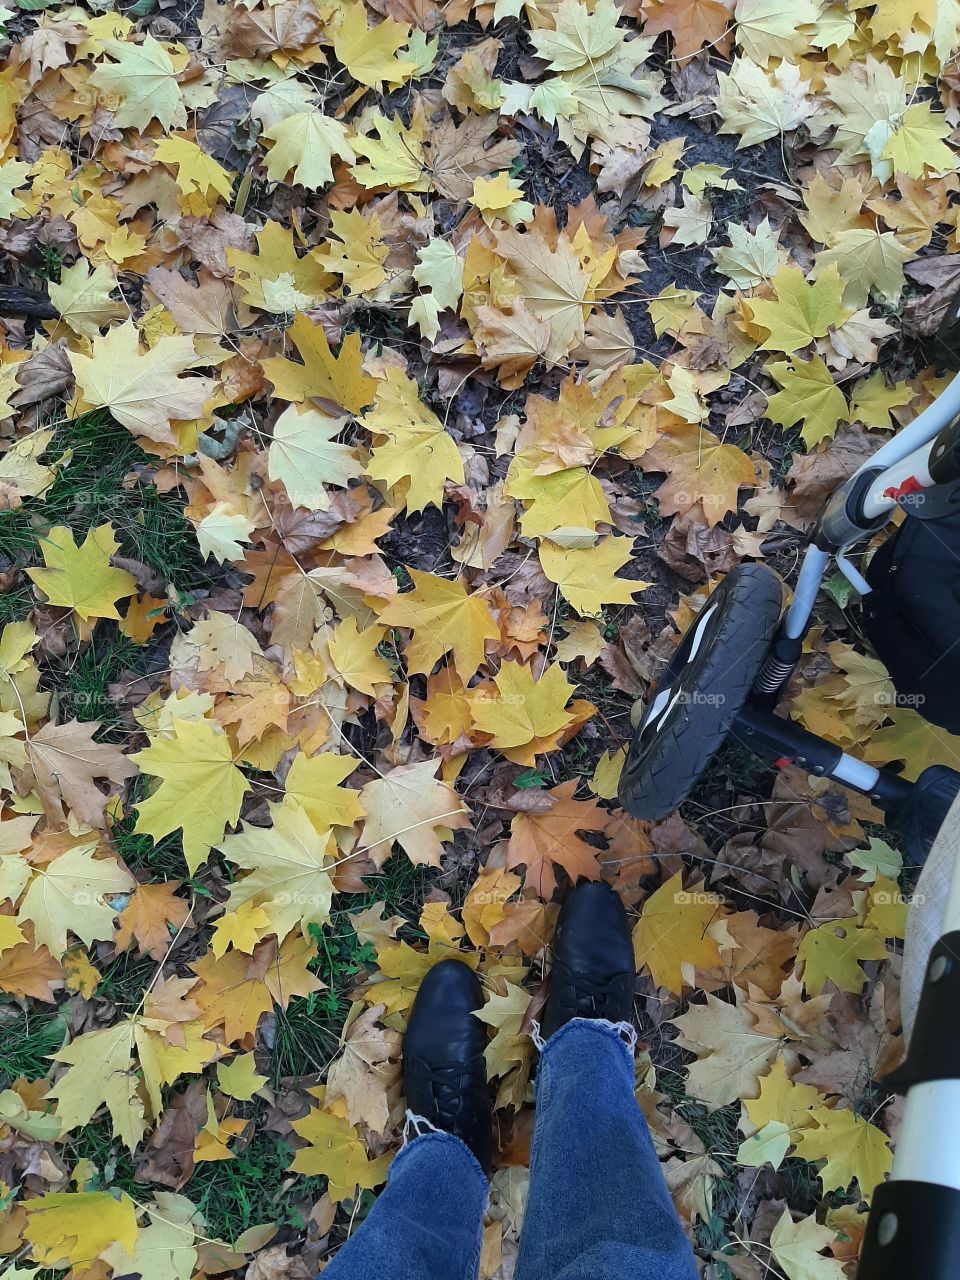 Leaves underfoot